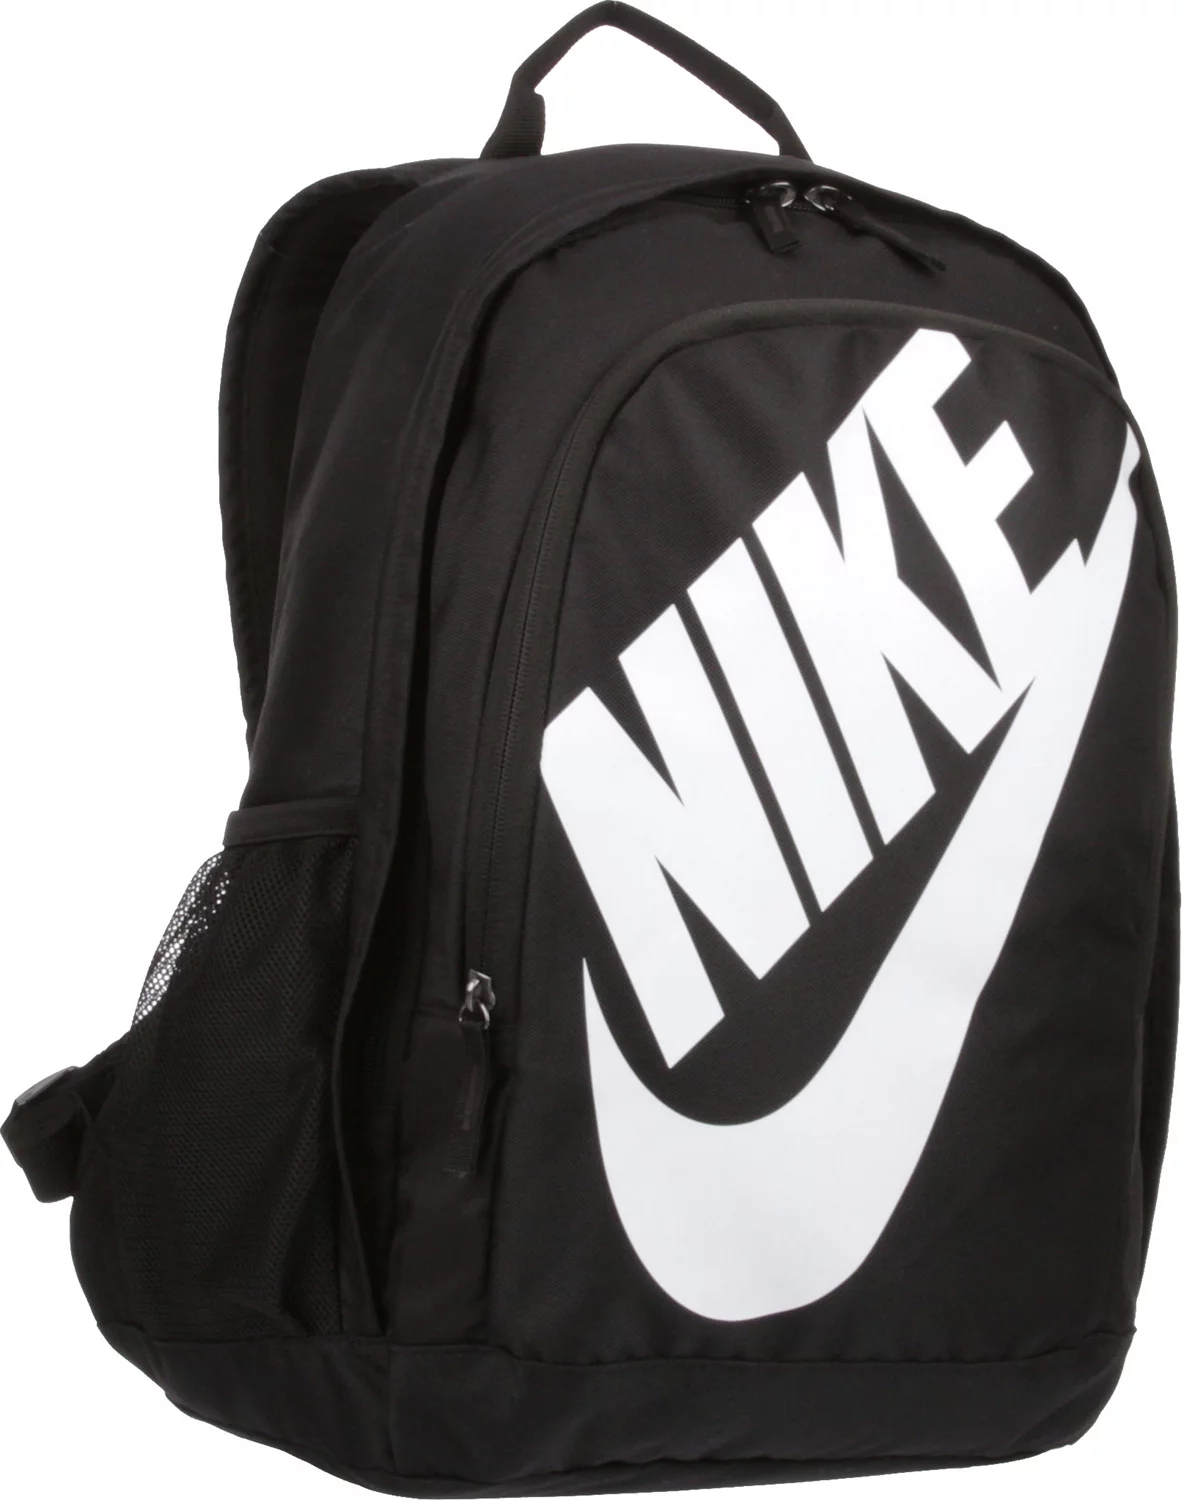 largest nike backpack